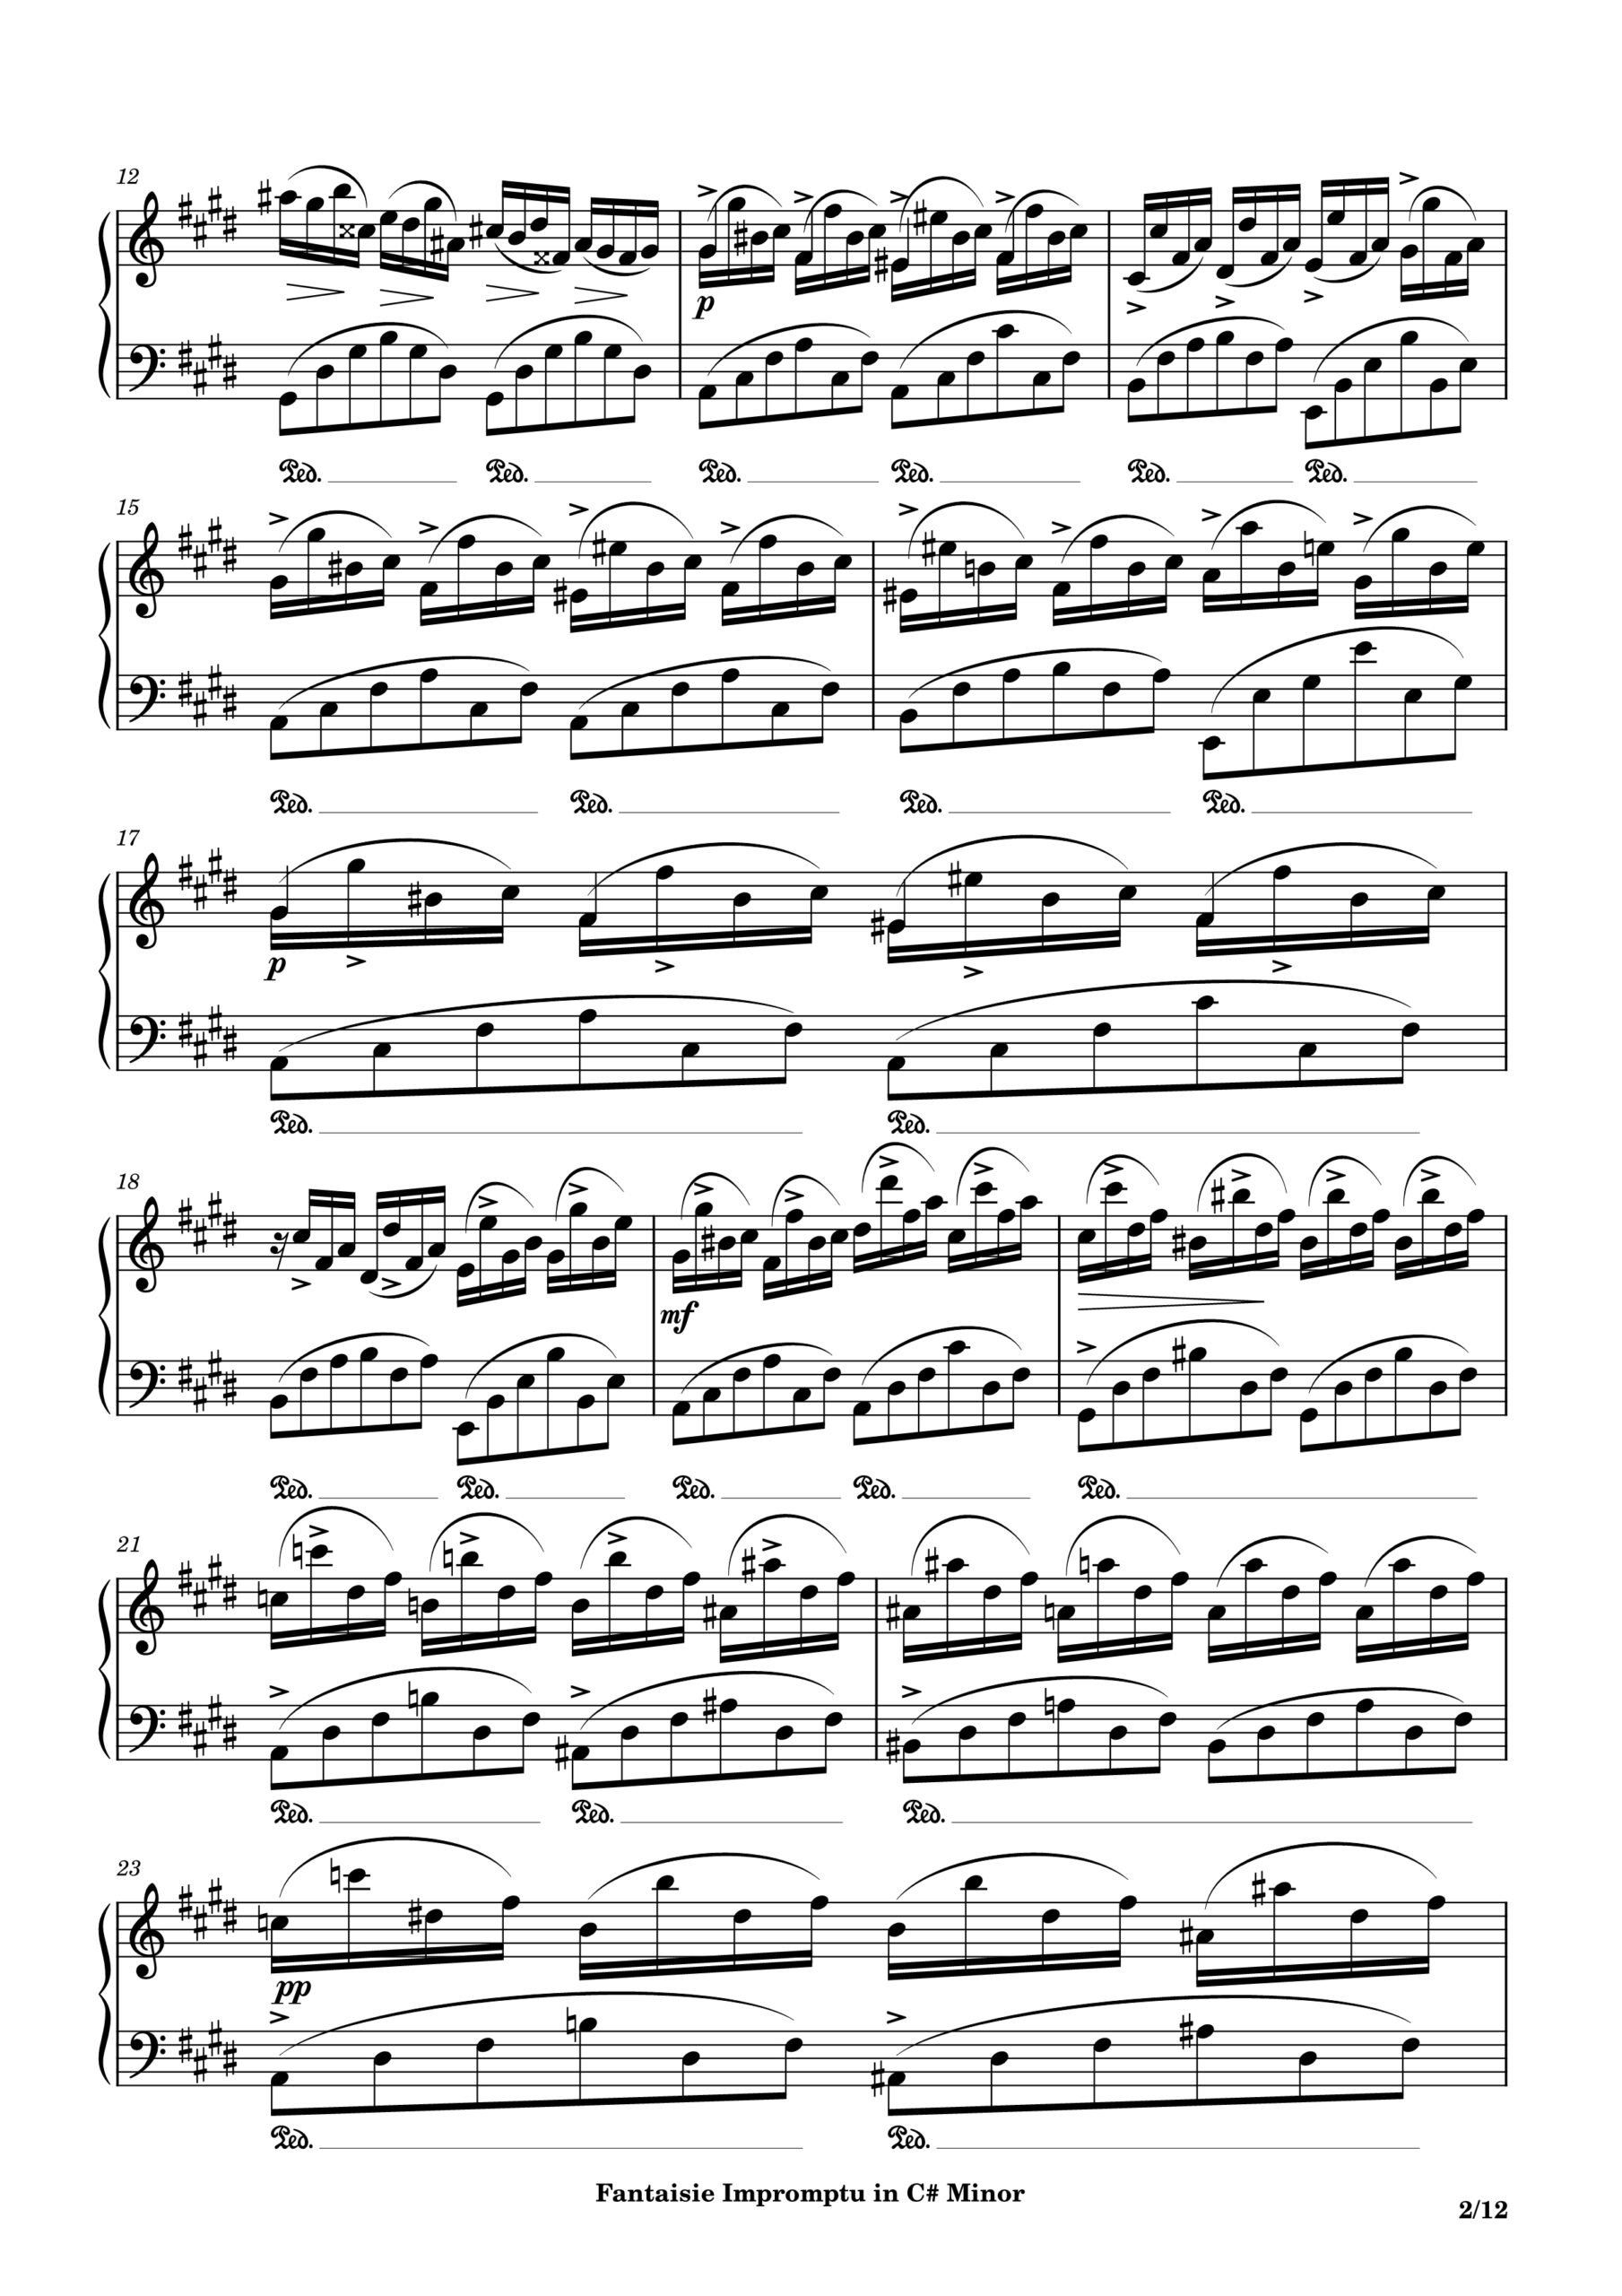 Chopin, Fantaisie Impromptu in C# Minor Sheet Music Page 2